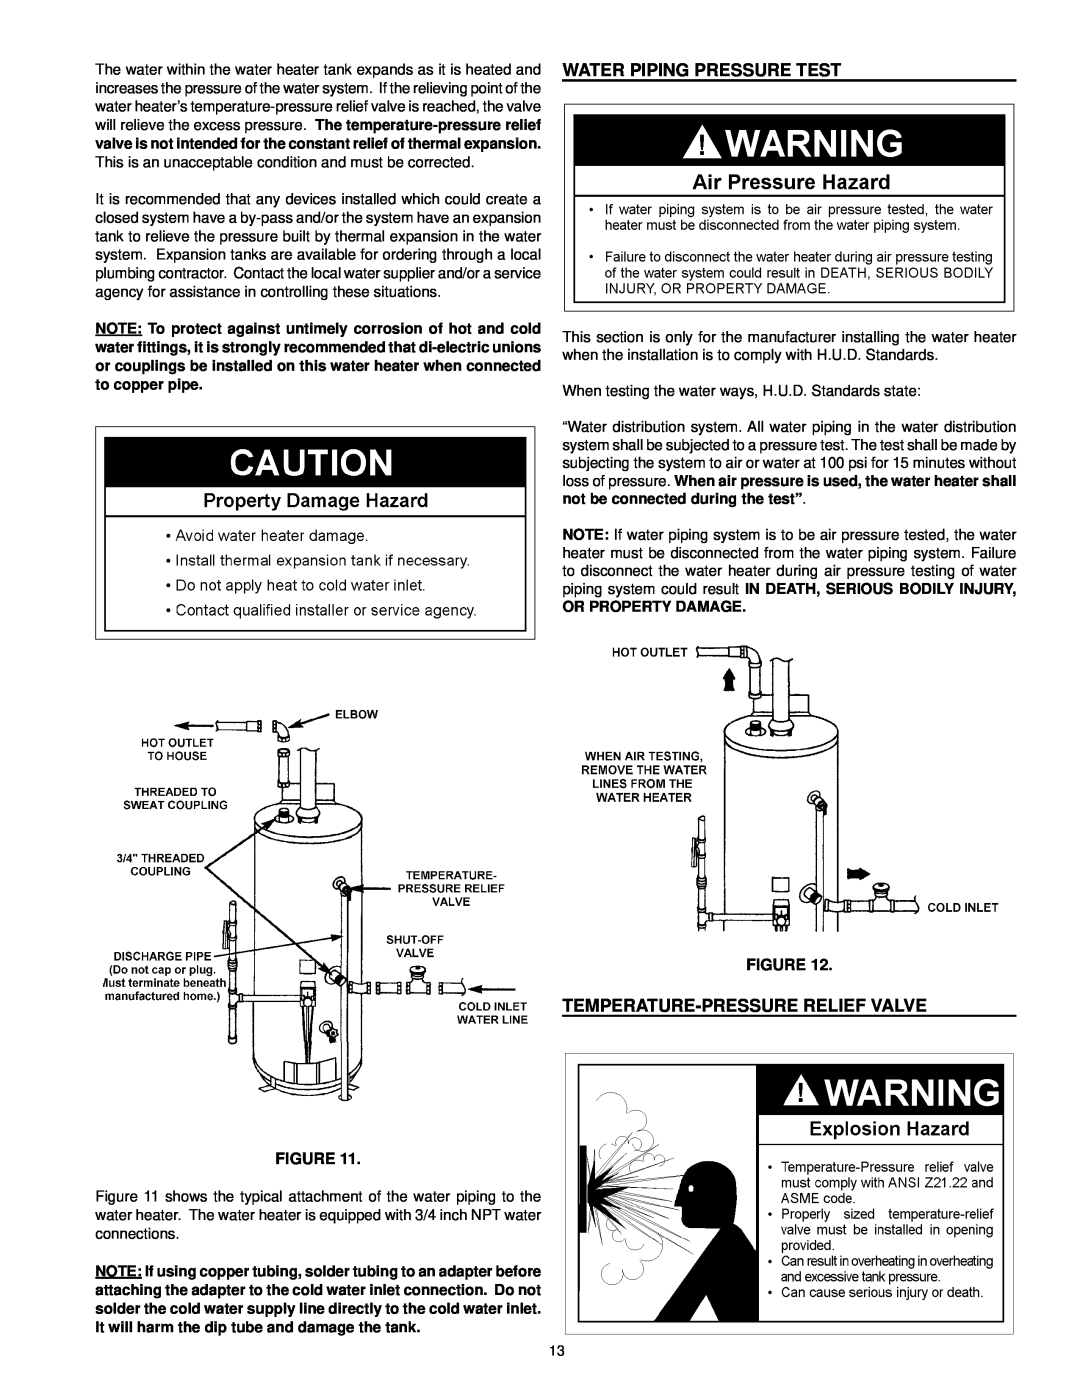 Kenmore 153.33385 owner manual Water Piping Pressure Test, Temperature-Pressurerelief Valve, Figure, Or Property Damage 